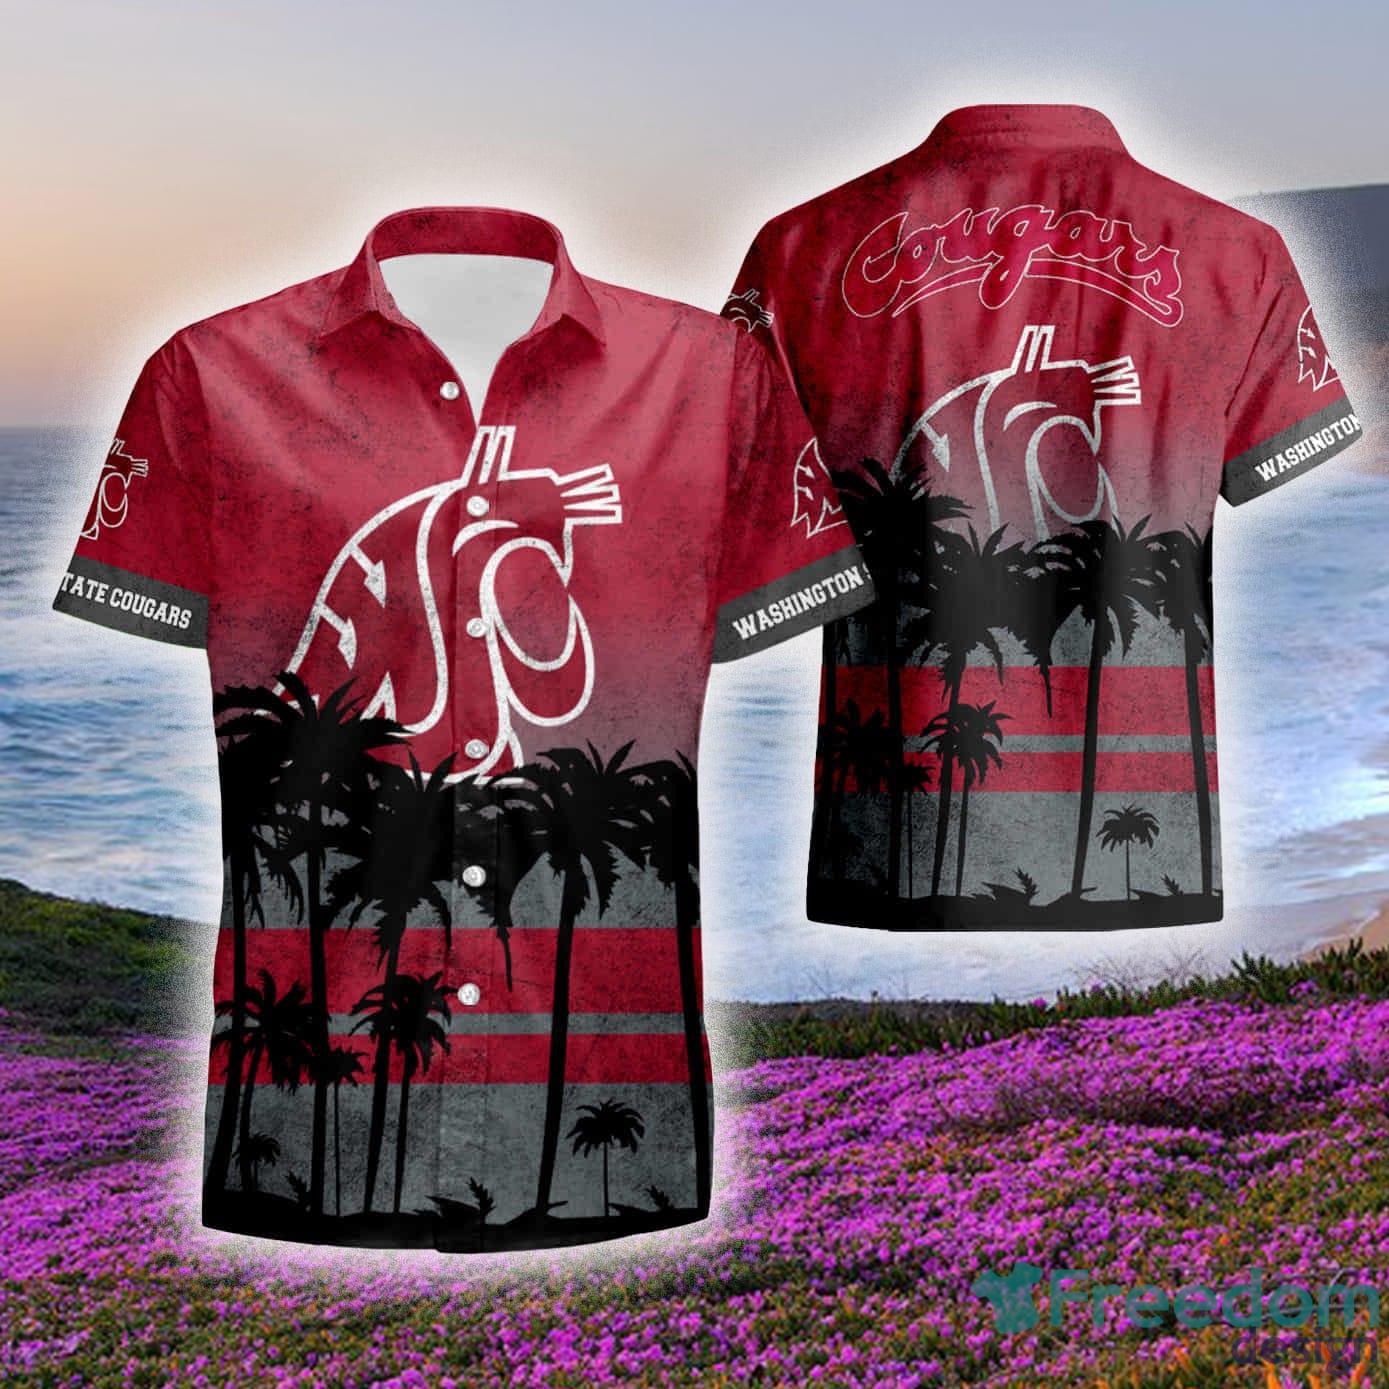 Washington Nationals Sport Fans Hibiscus All Over Print 3D Hawaiian Shirt -  Freedomdesign